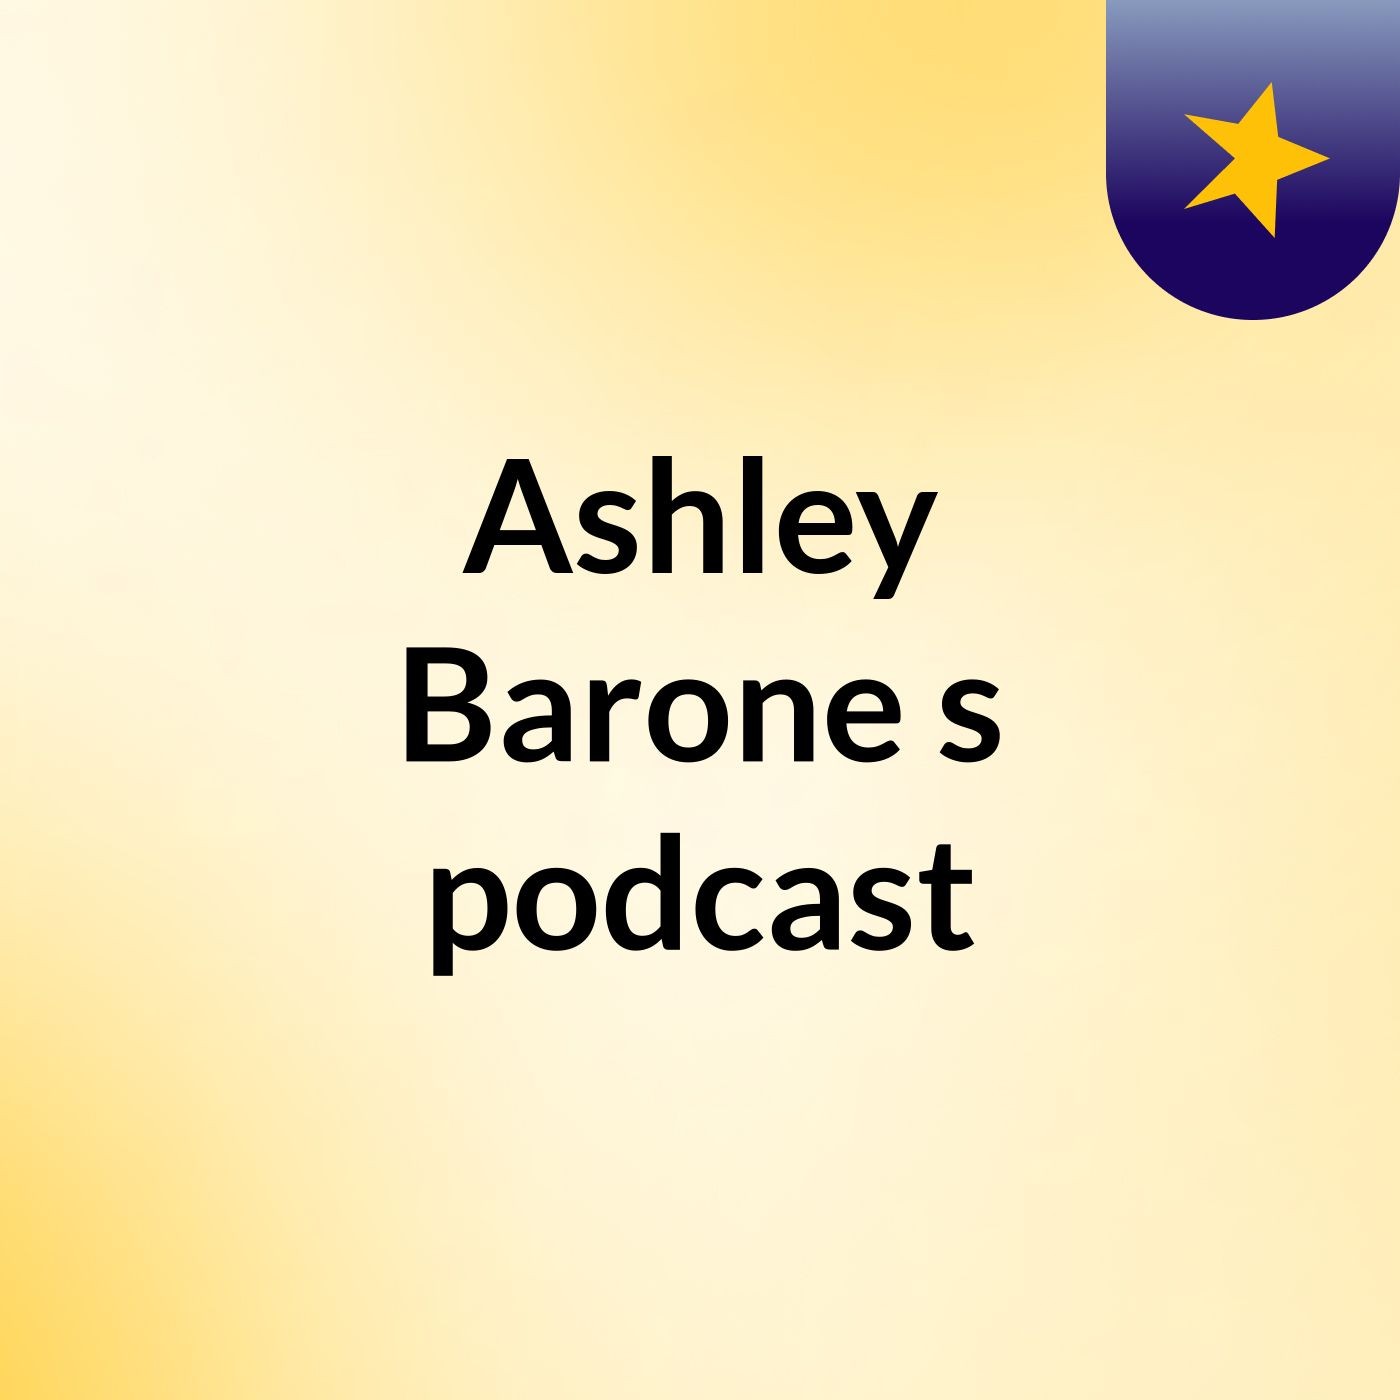 Ashley Barone's podcast